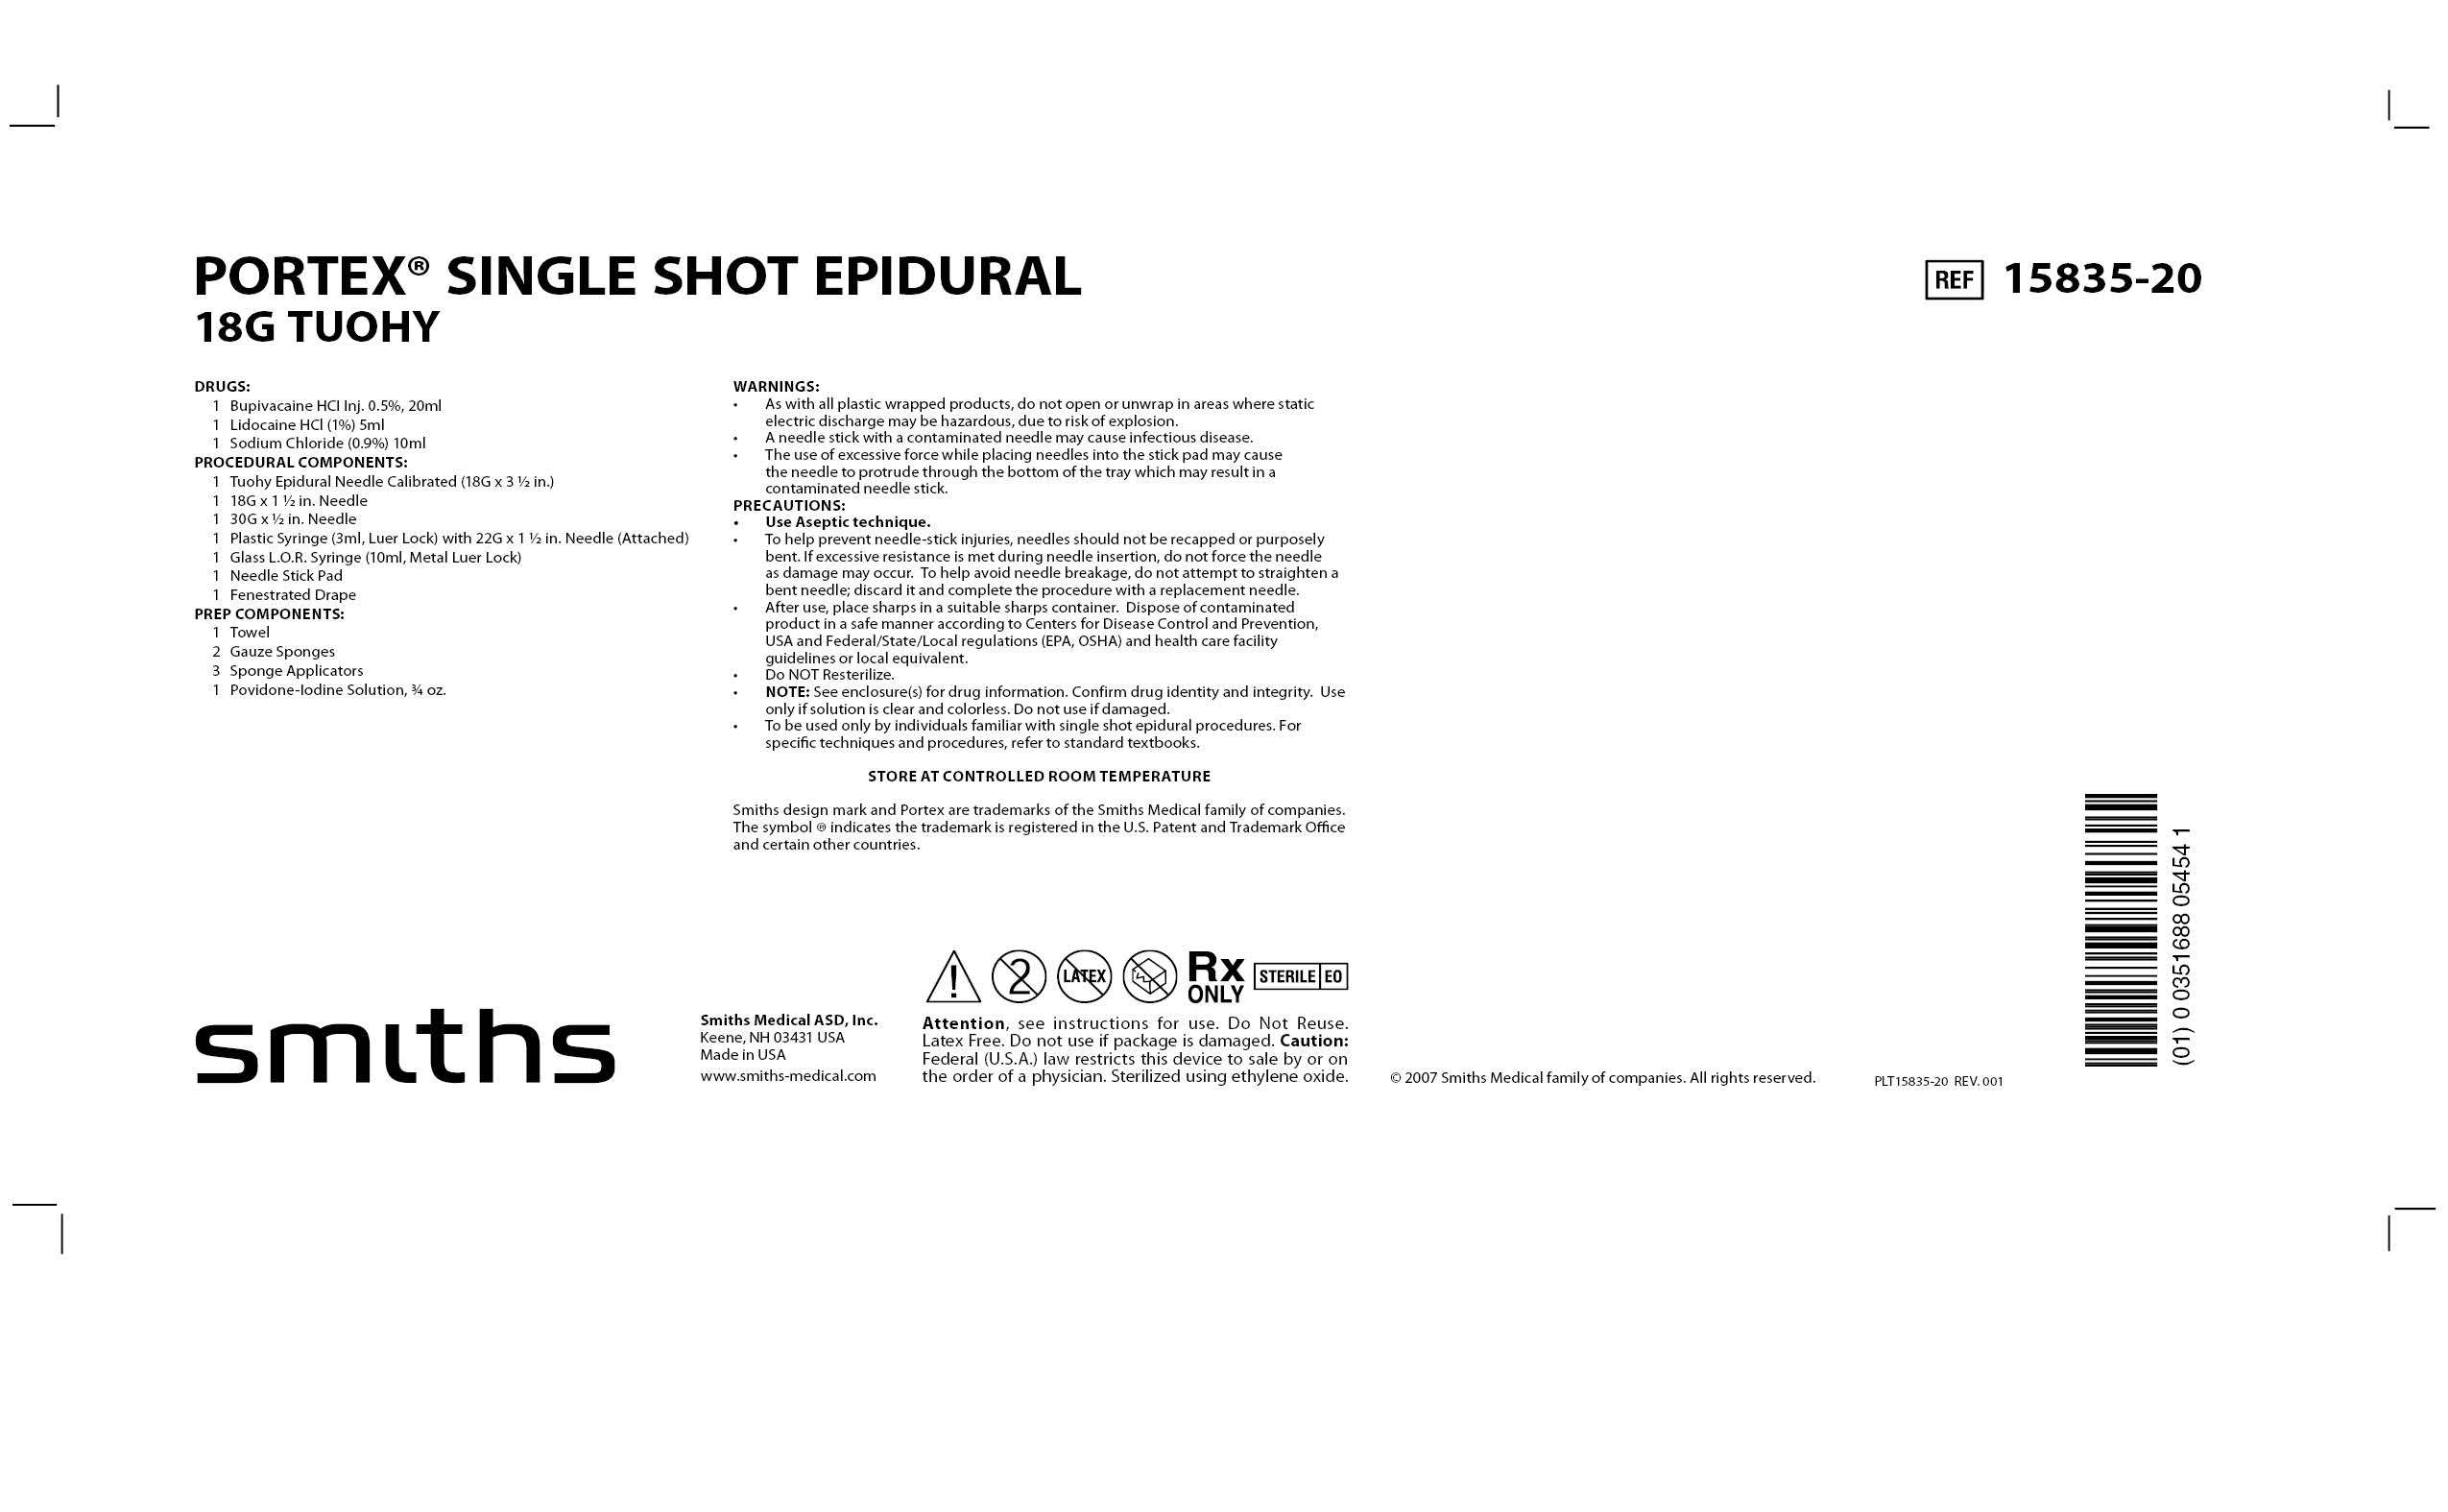 15835-20 PORTEX SINGLE SHOT EPIDURAL 18G TUOHY